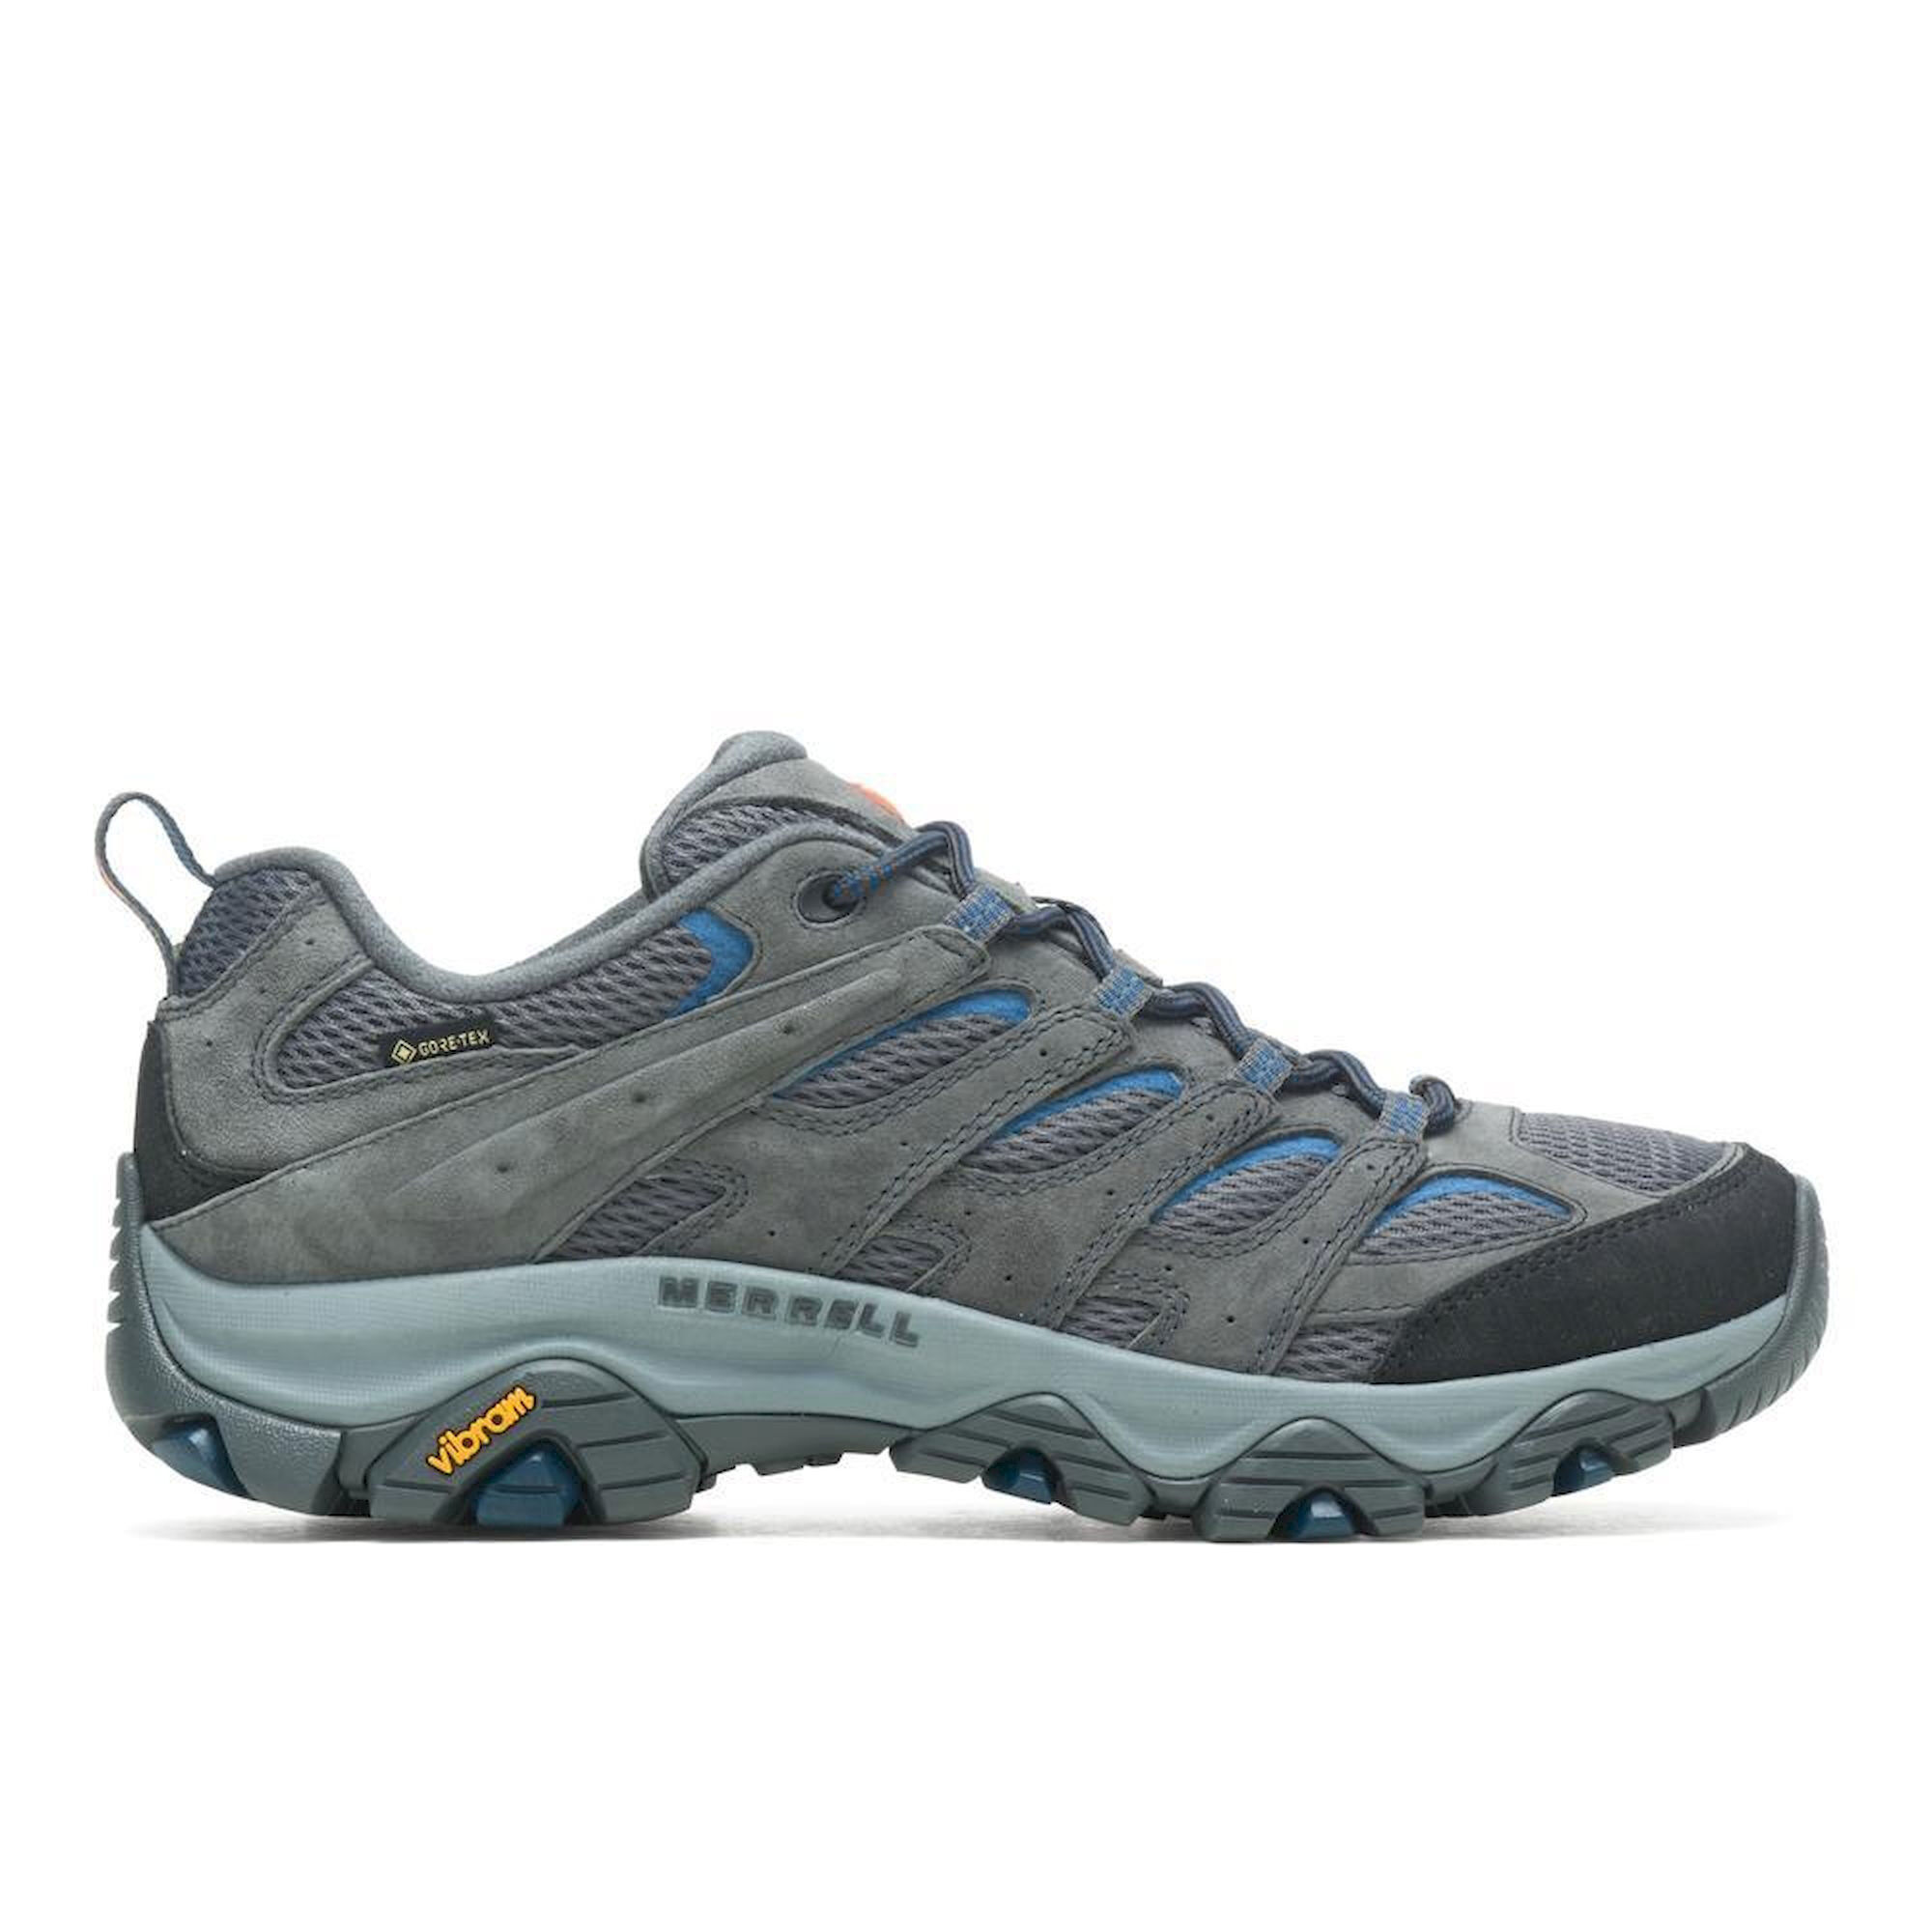 Merrell Moab 3 GTX - Hiking shoes - Men's